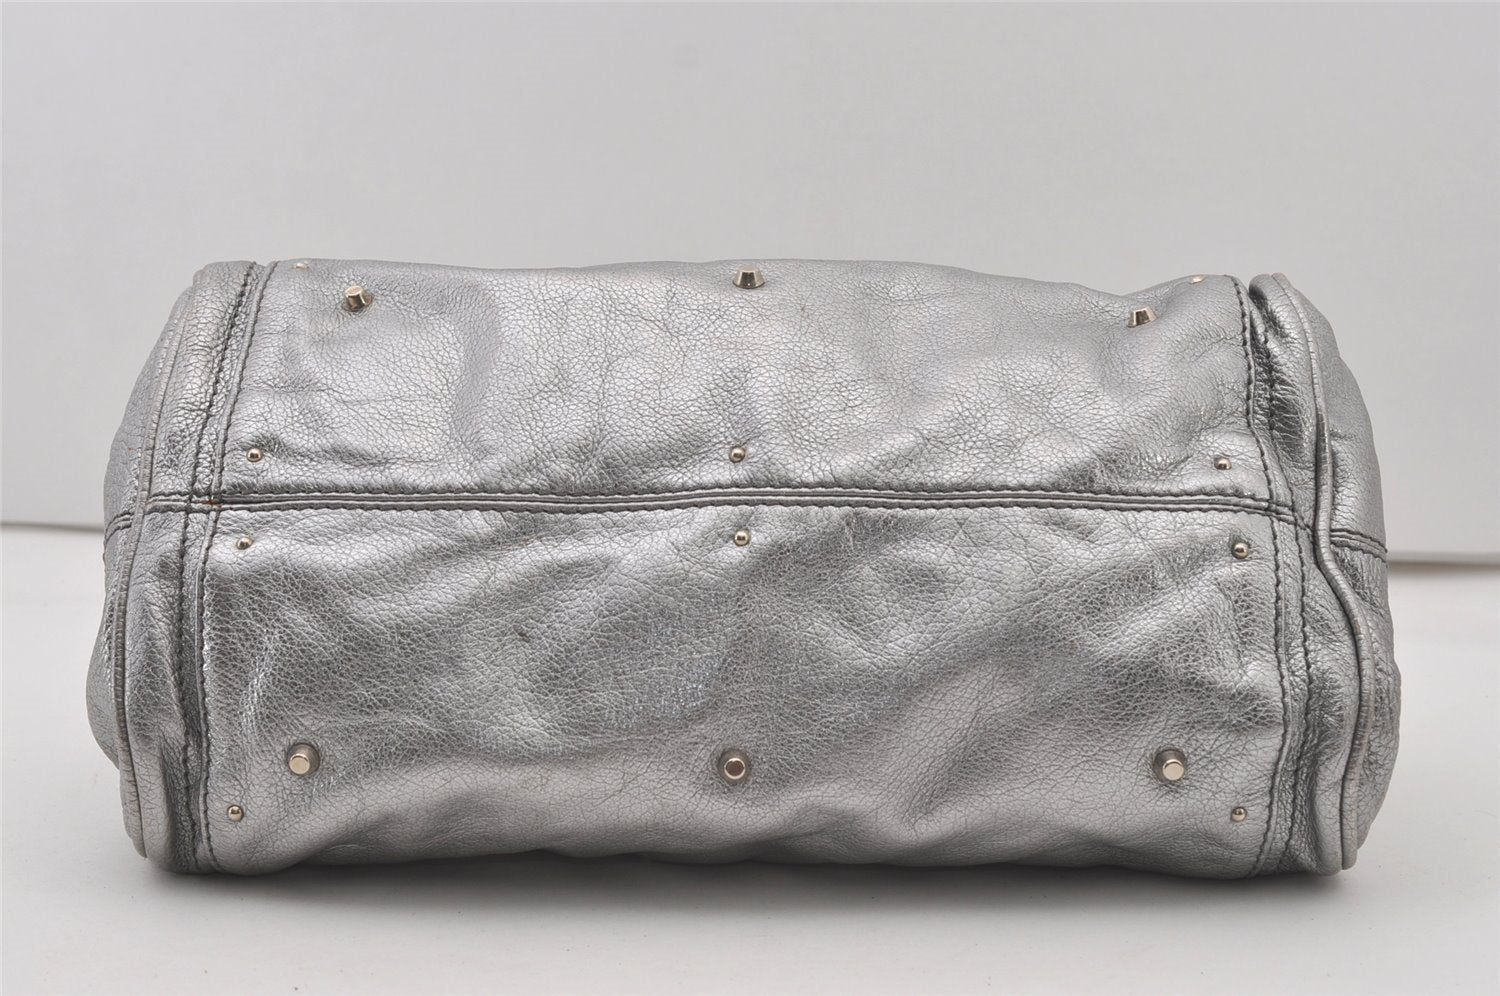 Authentic Chloe Vintage Paddington Leather Shoulder Hand Bag Silver 1305J